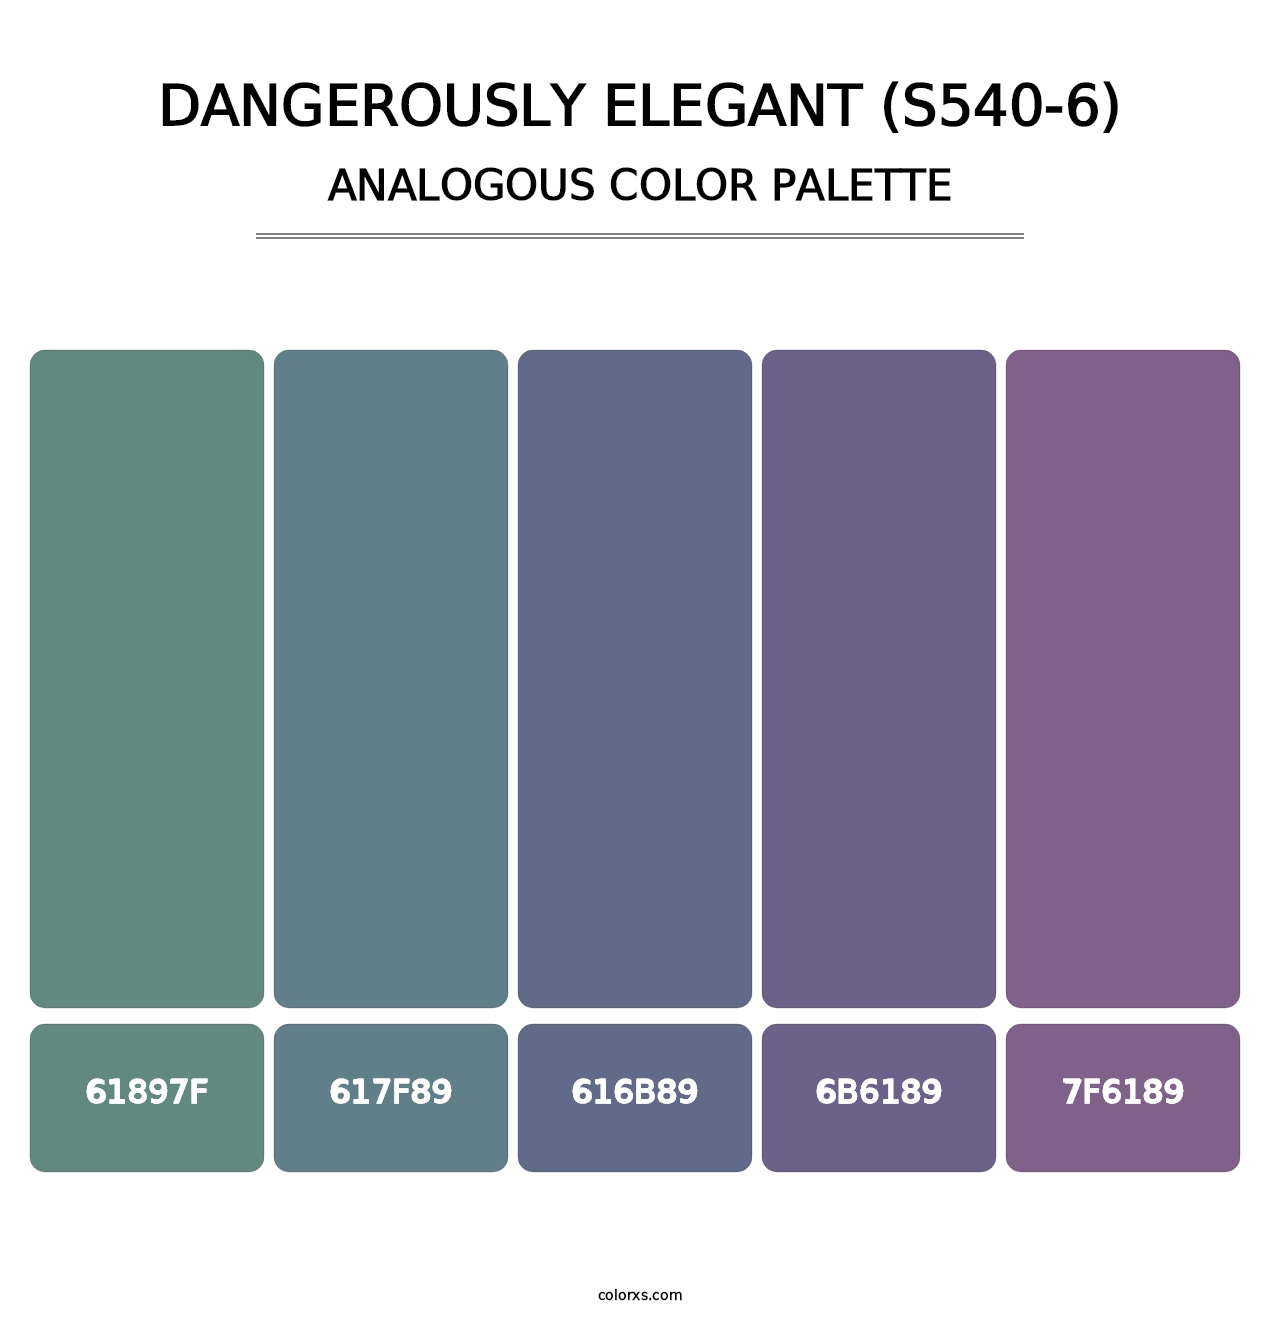 Dangerously Elegant (S540-6) - Analogous Color Palette